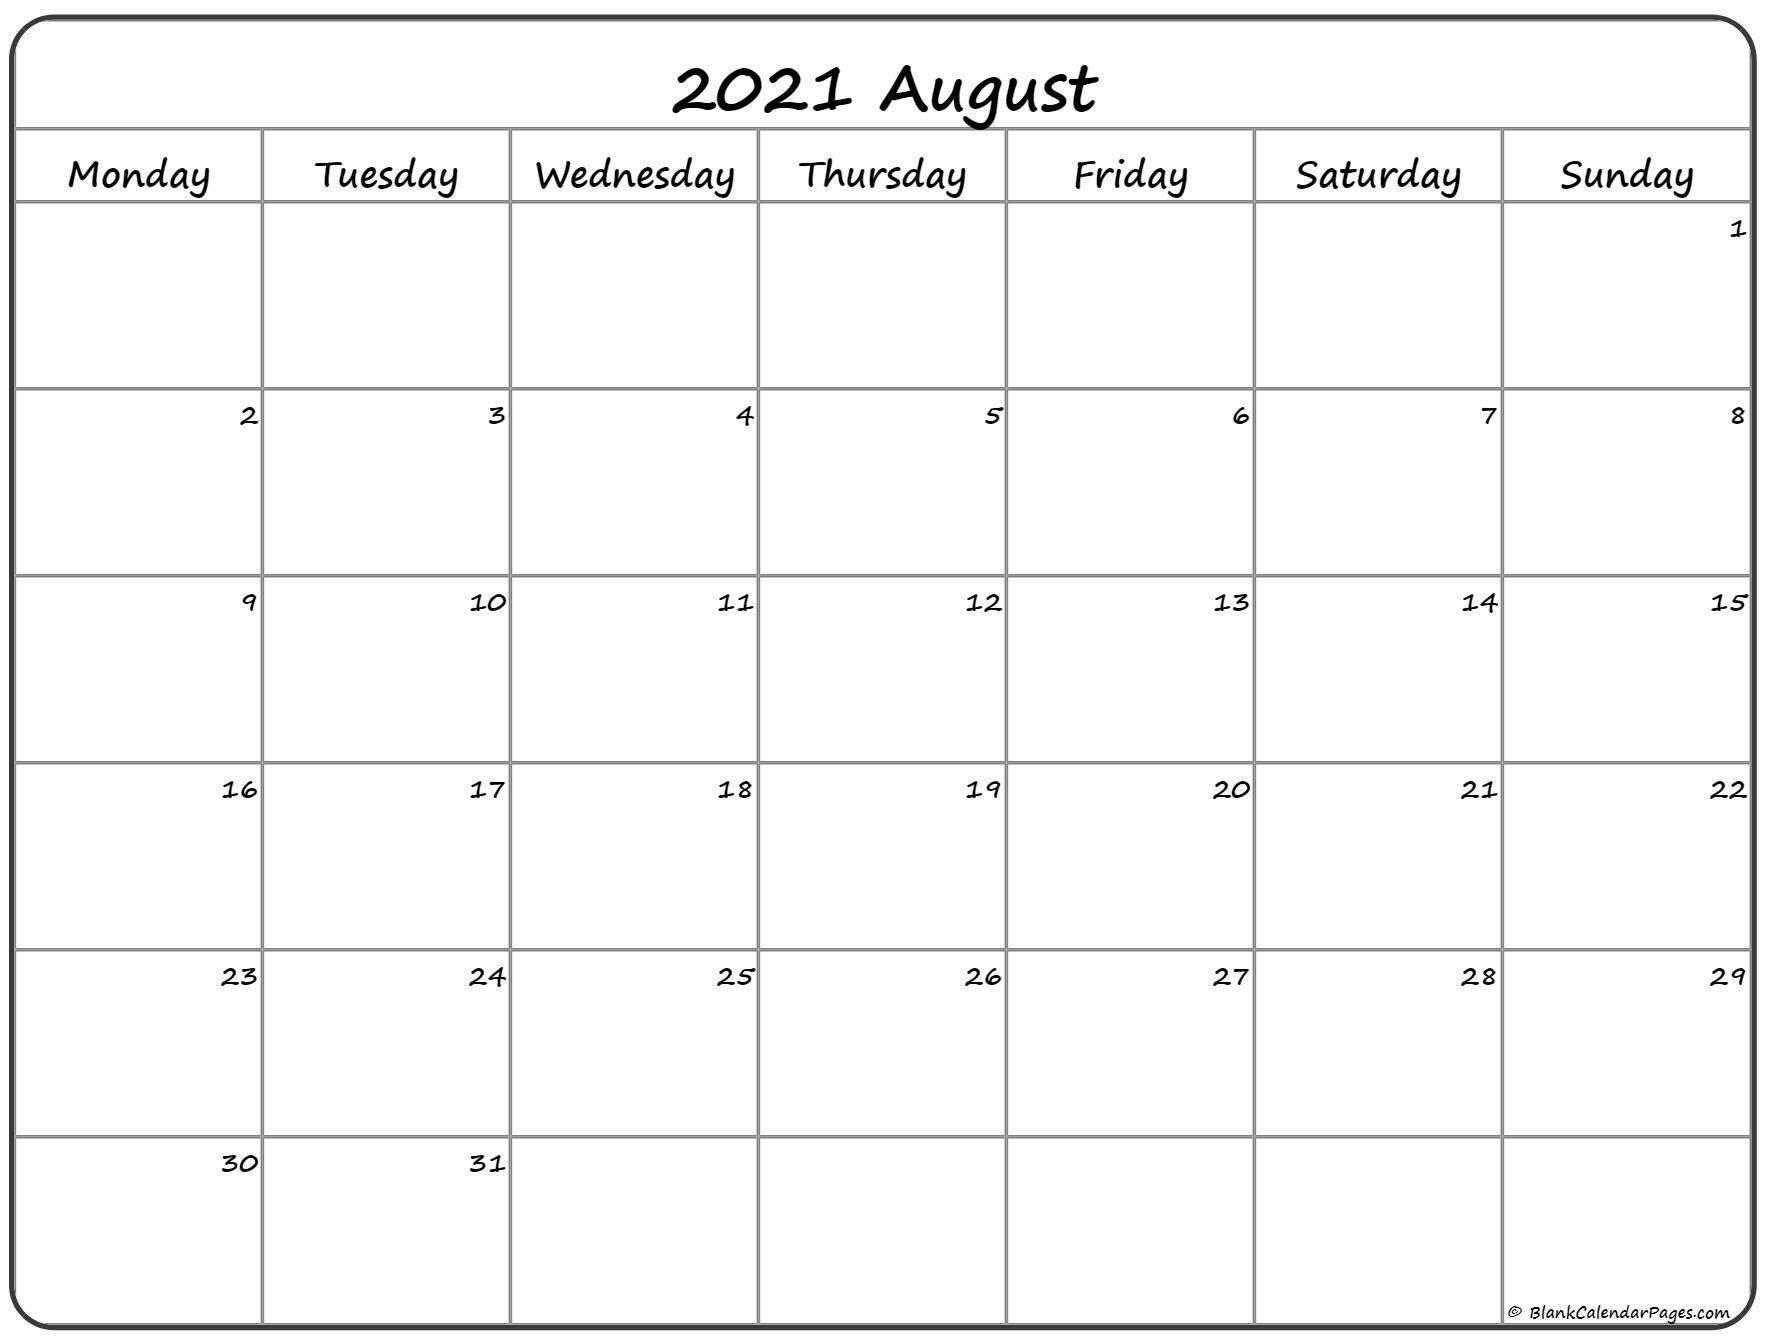 August 2021 Monday Calendar | Monday To Sunday